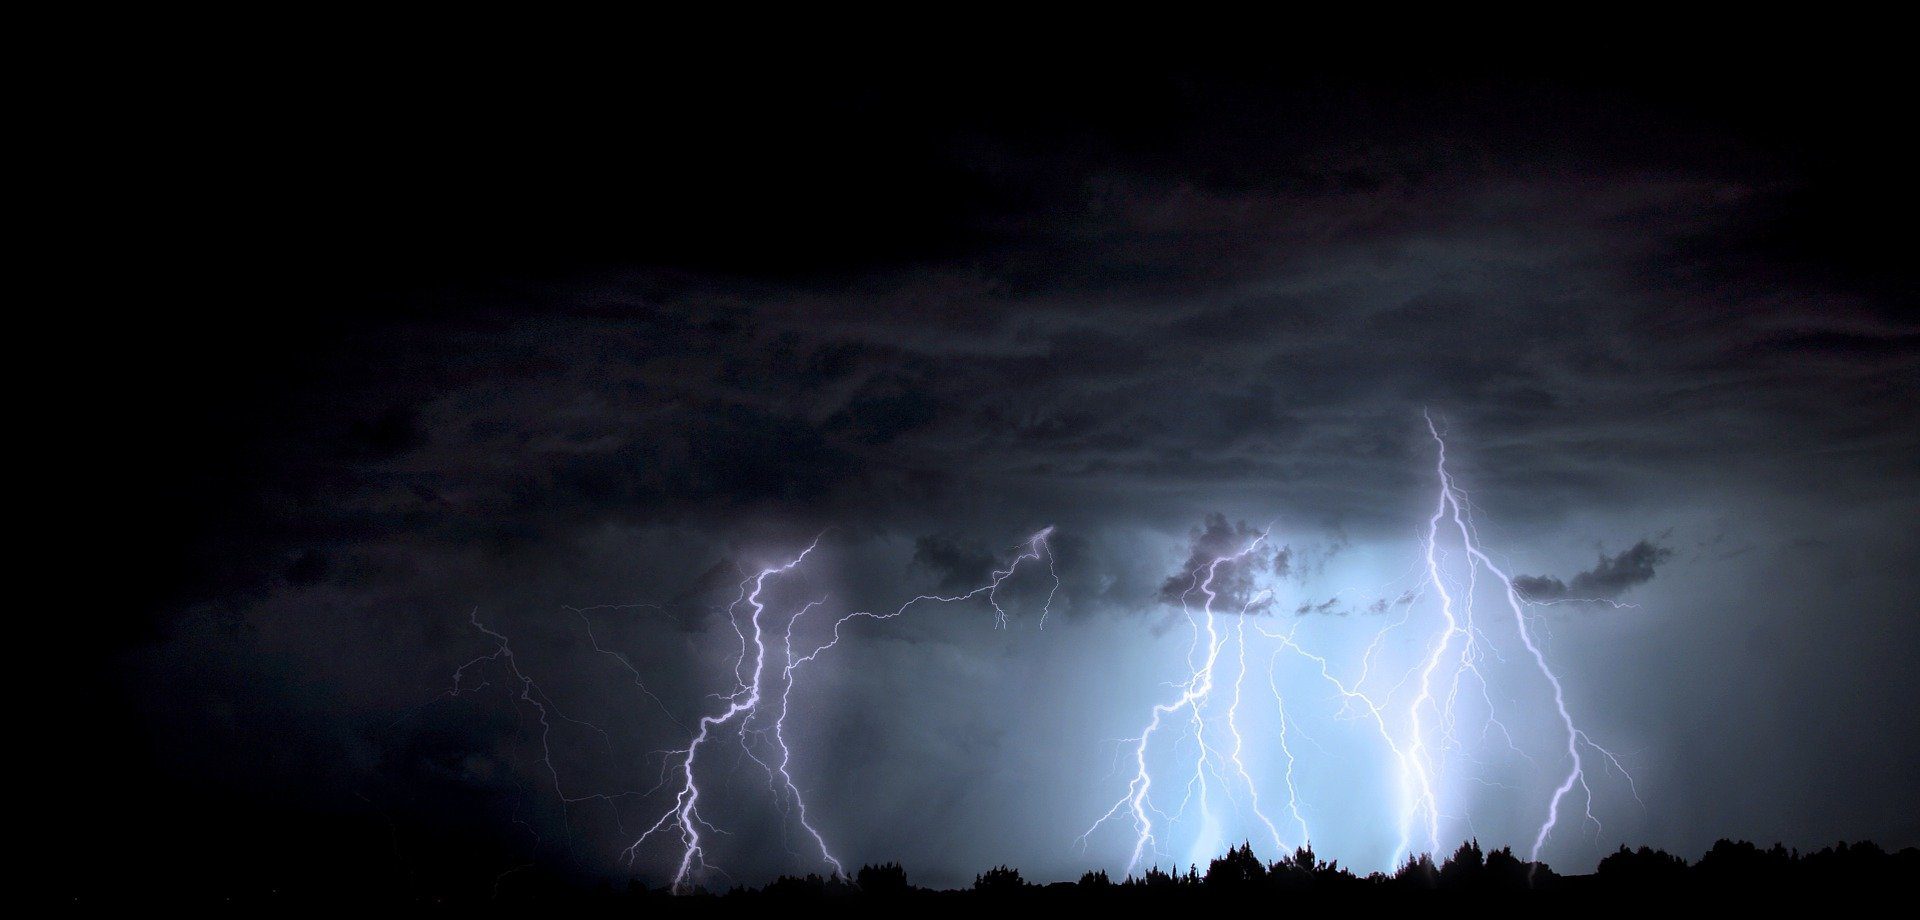 Storm Safety: Lightning